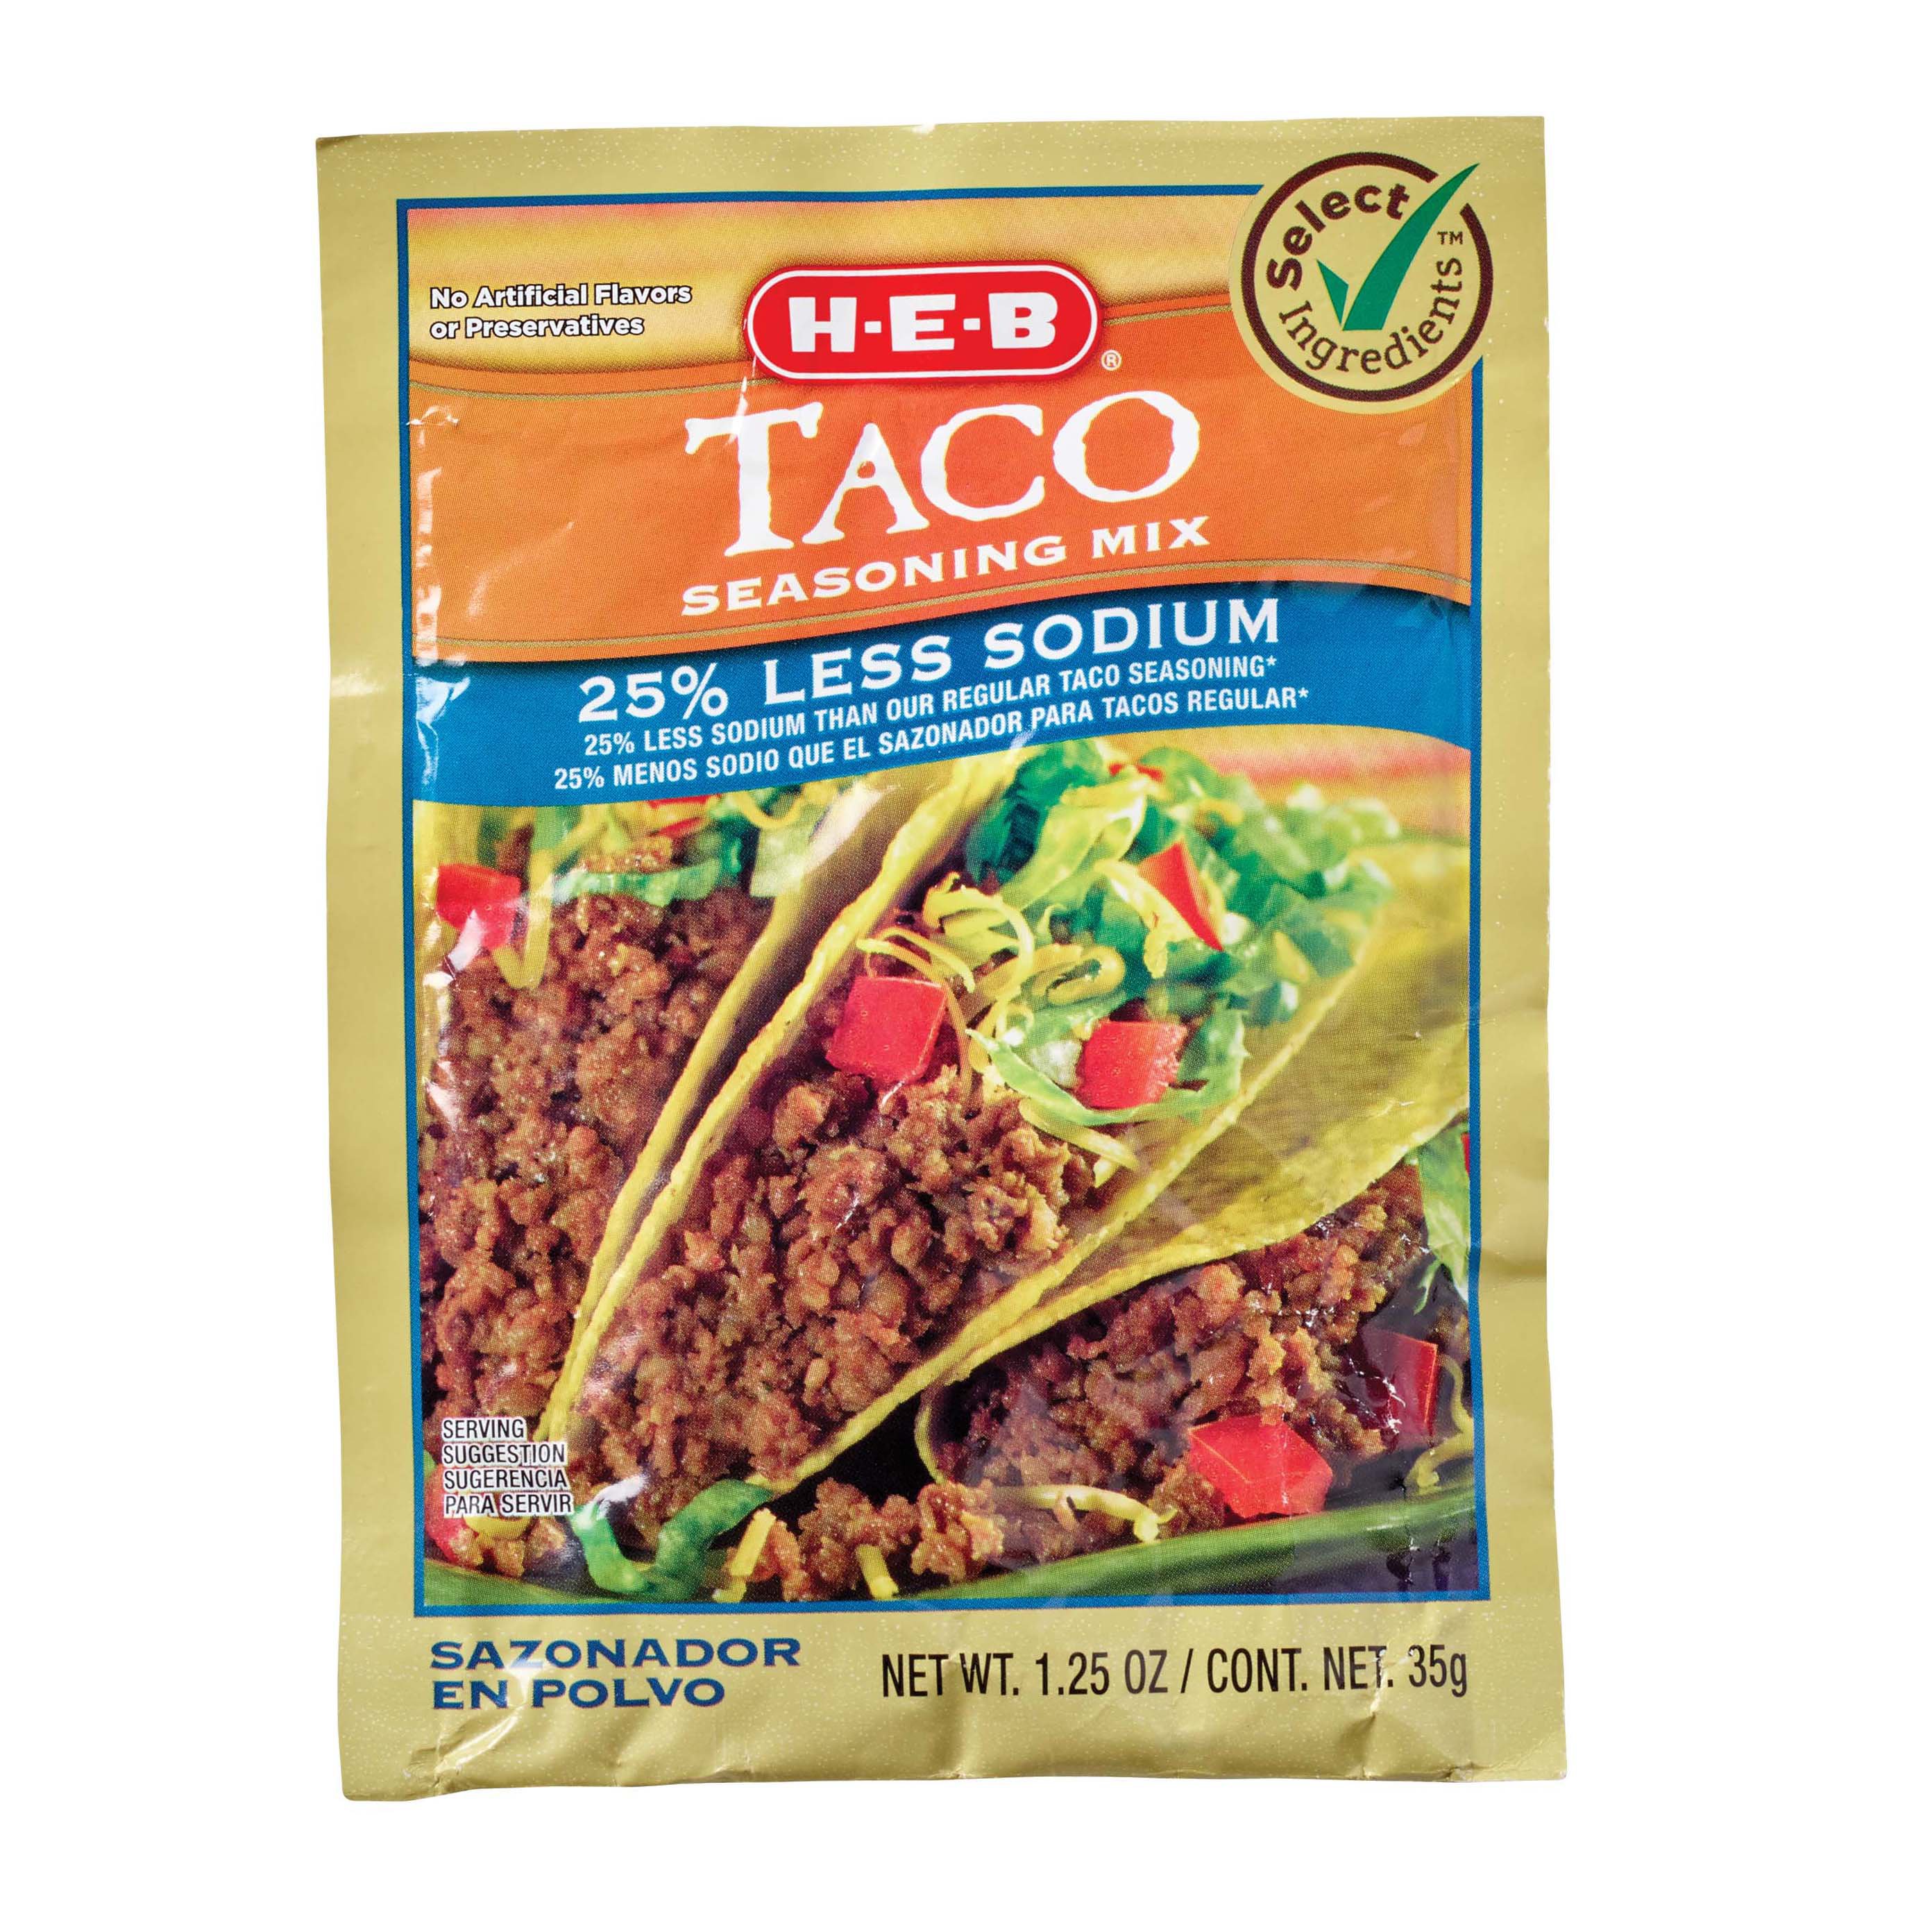 Homemade Taco Seasoning Mix Outlets Online, Save 54 jlcatj.gob.mx